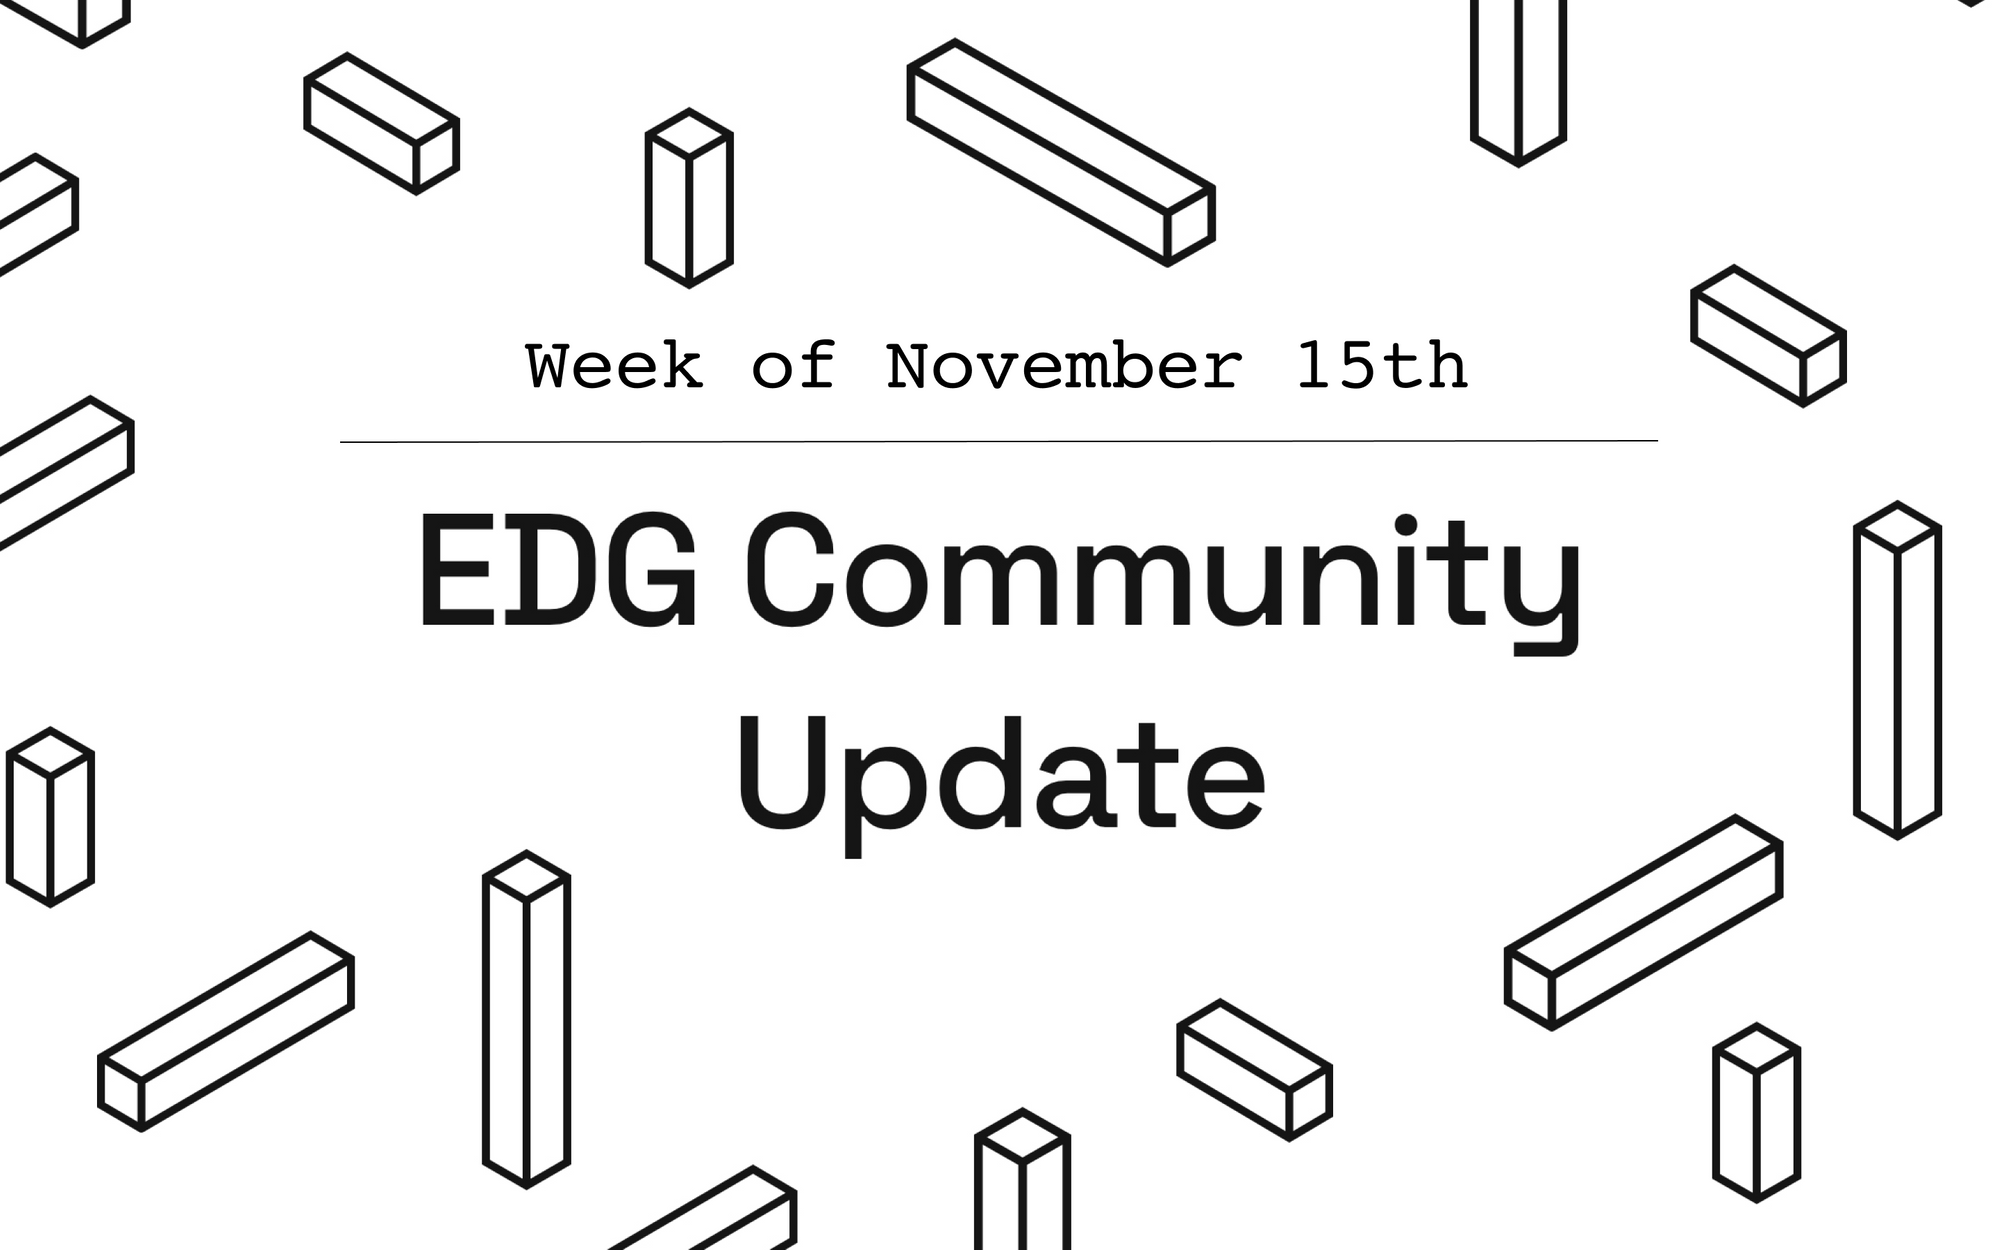 EDG Community Update: Week of November 15th